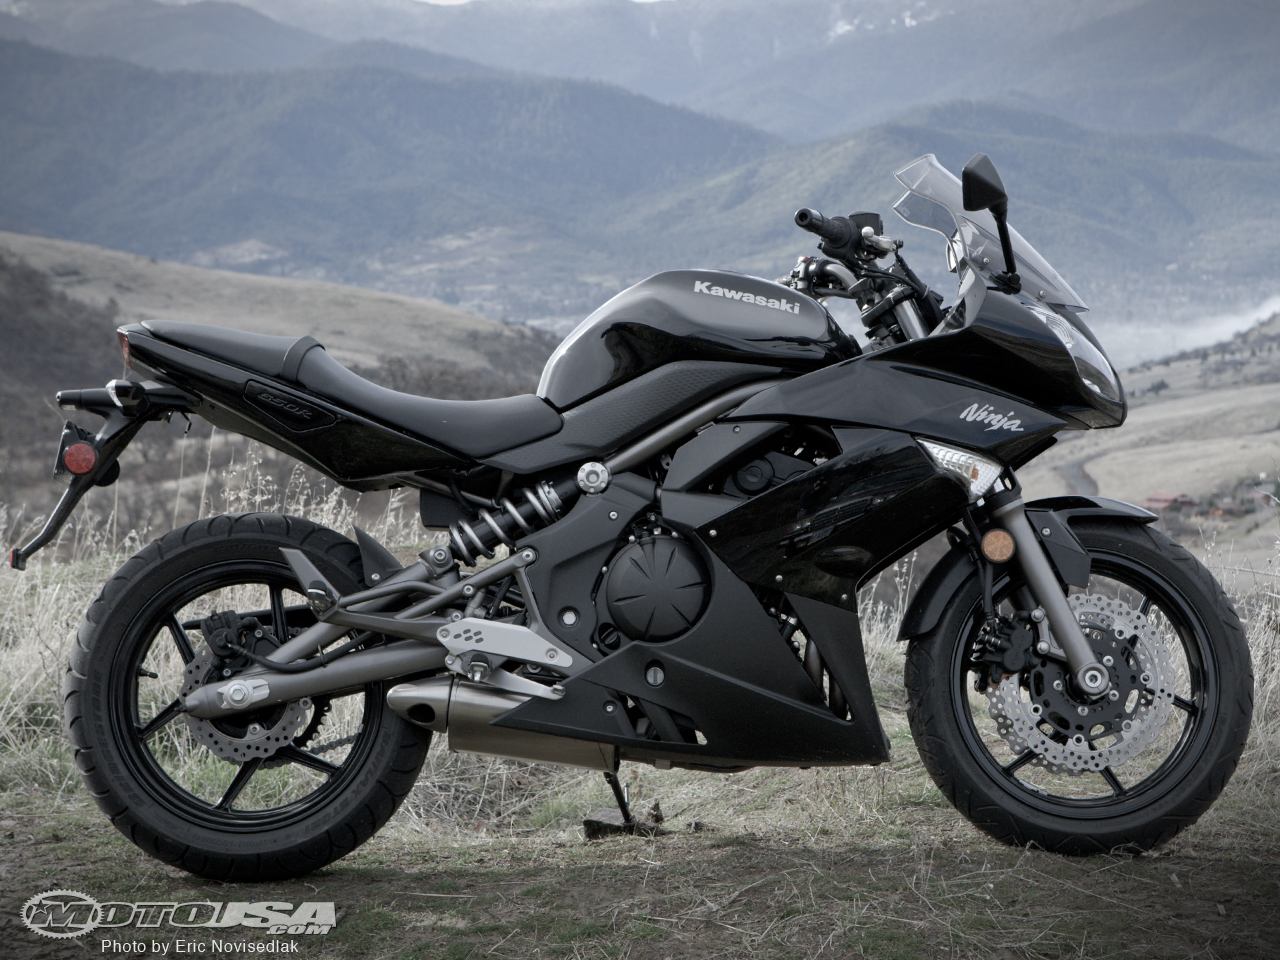 Kawasaki Ninja 650r Re Picture Of Motorcycle Usa